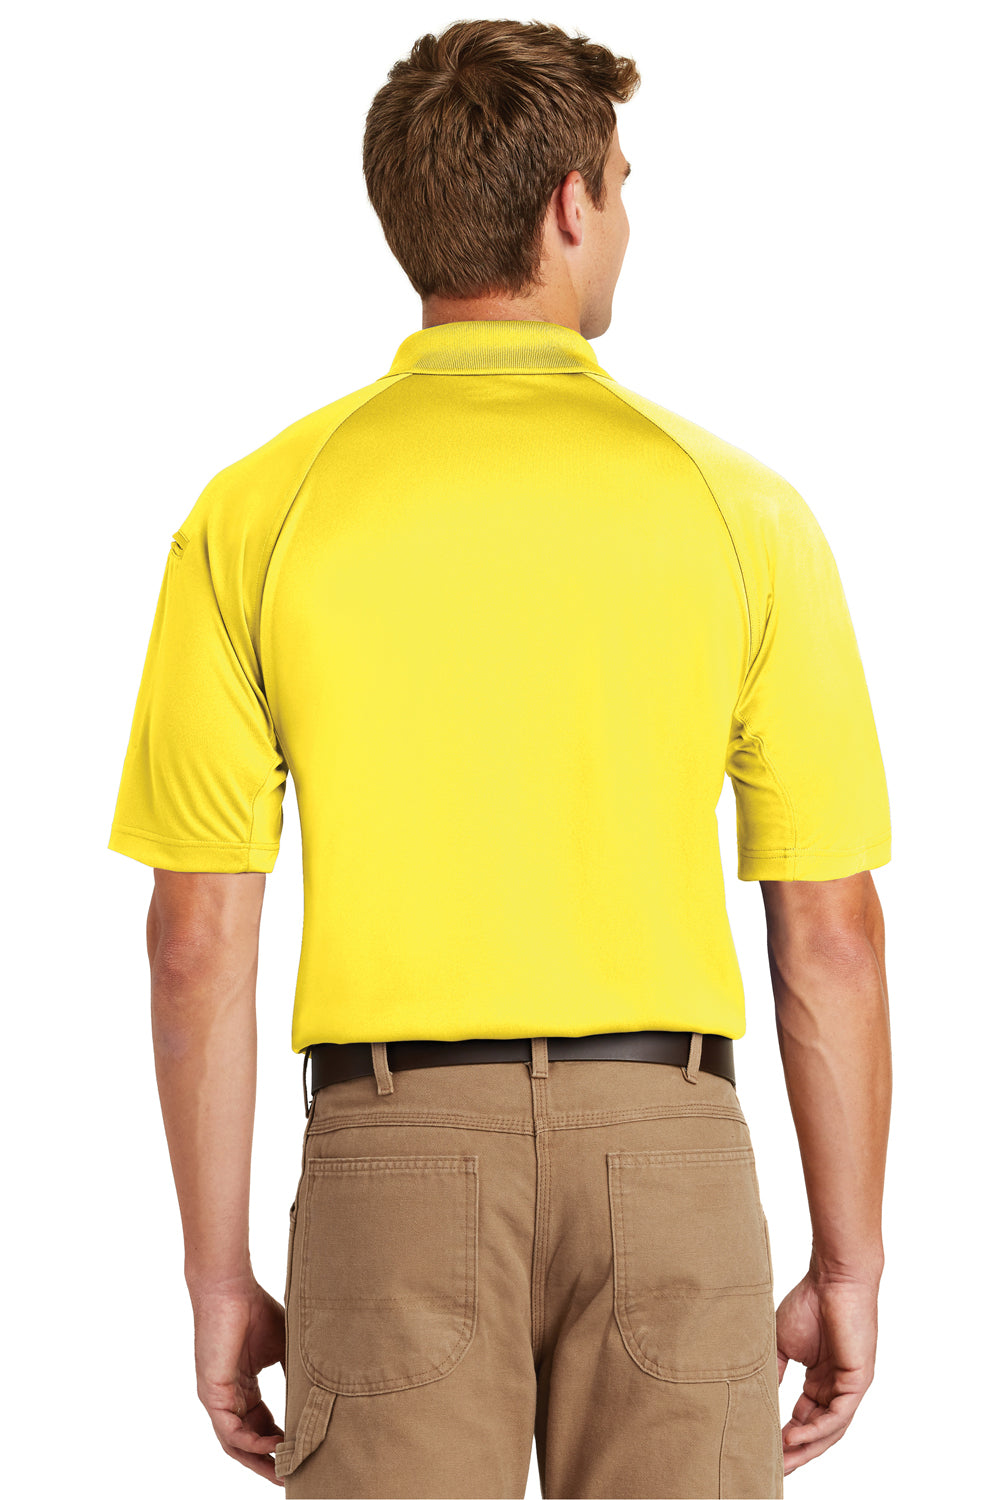 CornerStone CS410 Mens Select Tactical Moisture Wicking Short Sleeve Polo Shirt Yellow Back